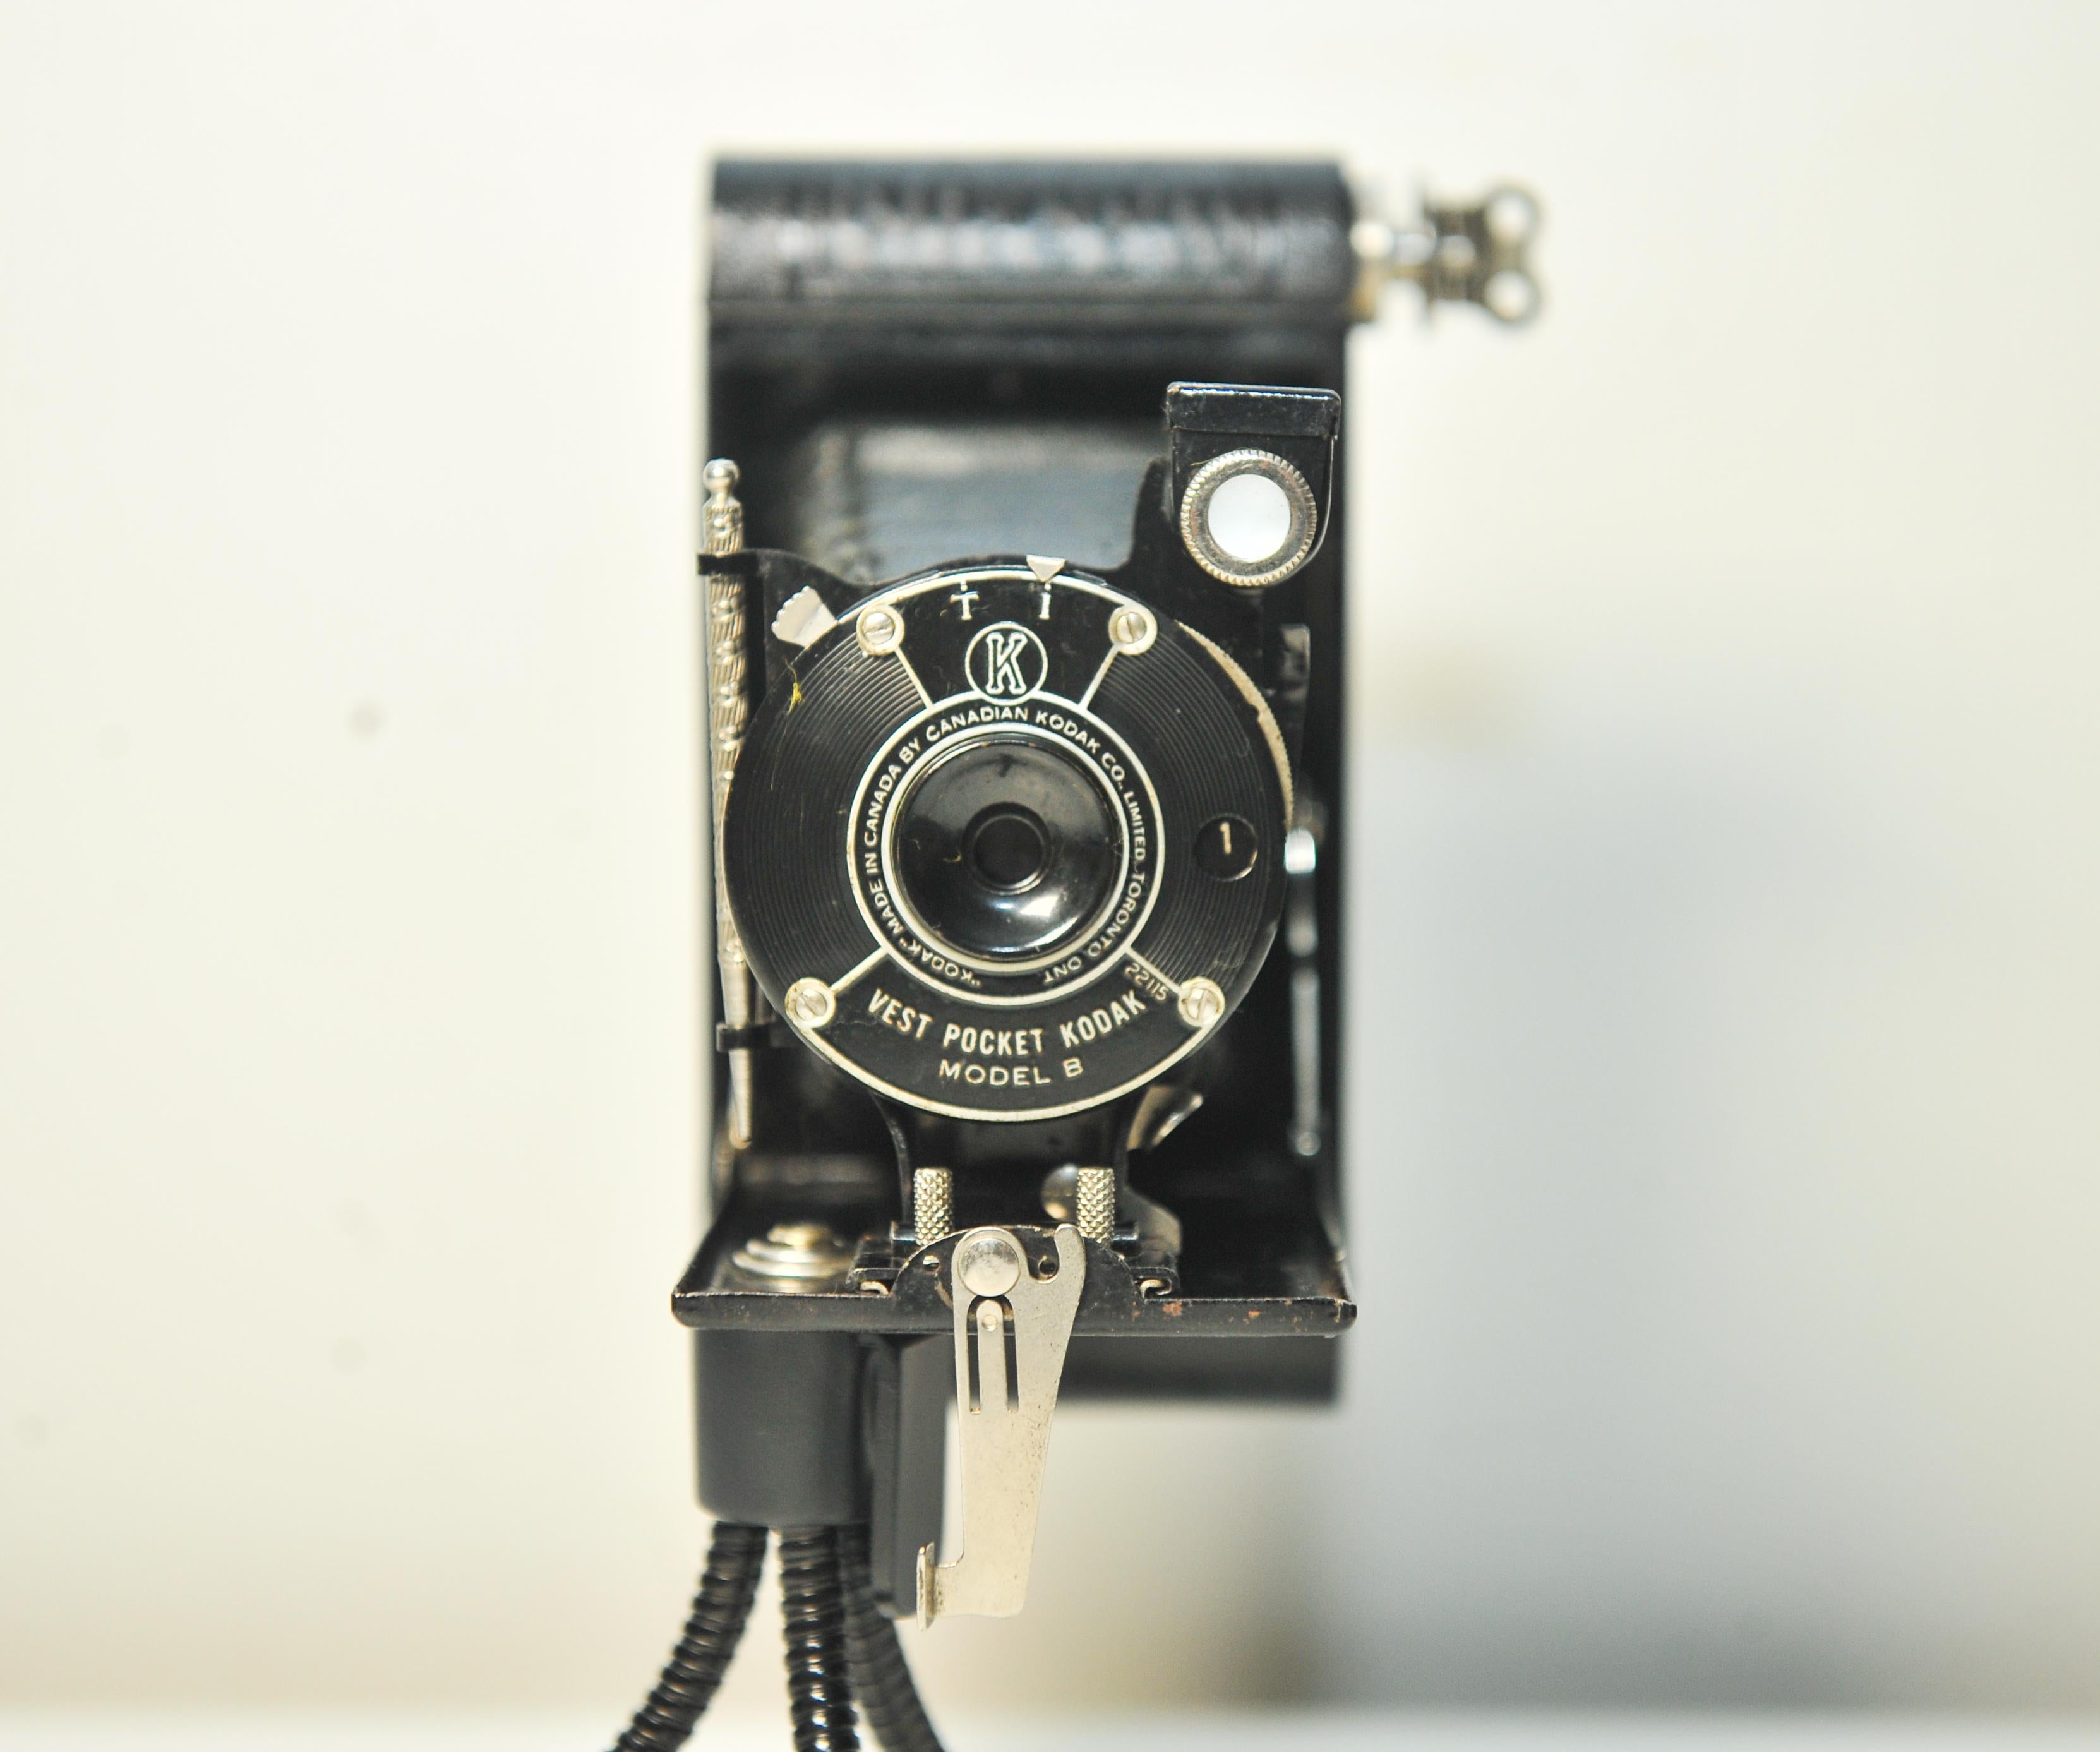 Art Deco Canadian Kodak Vest Pocket Kodak Model B 127 Film Folding Bellow Camera Made in Toronto, Ontario Canada 1925-34

Model ref 22115

This was a quite different camera; a primitive folding bed camera for making 4×6.5cm exposures on 127 film. It